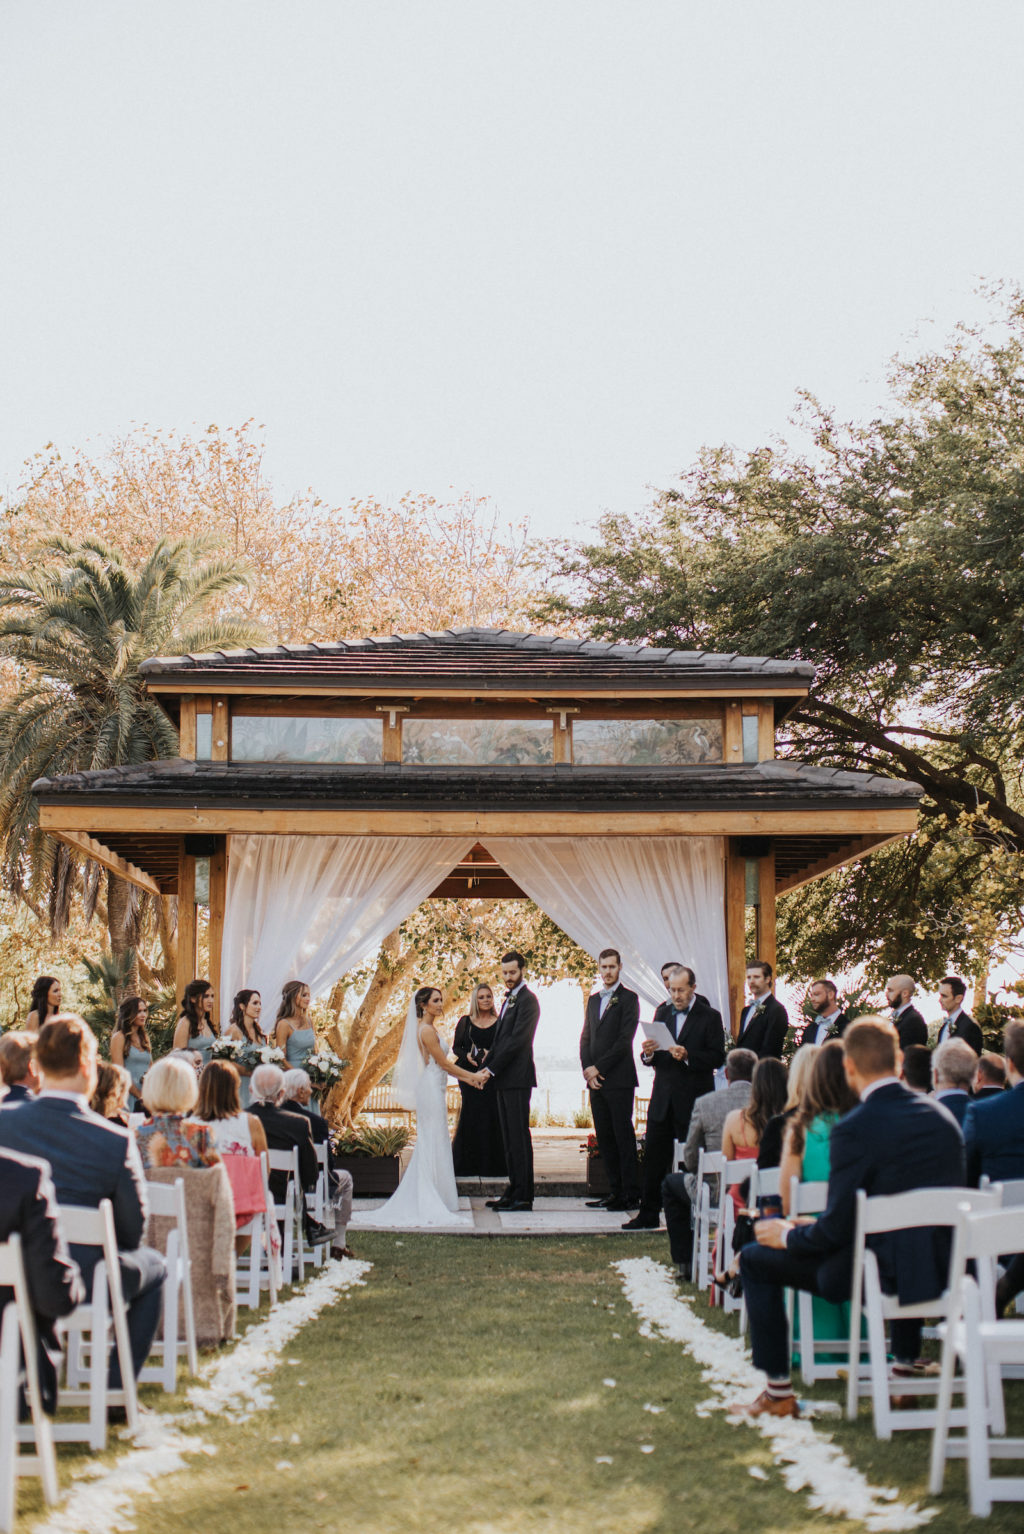 Outdoor Botanical Garden Gazebo Wedding Ceremony with Draping | Sarasota Wedding Venue Selby Gardens